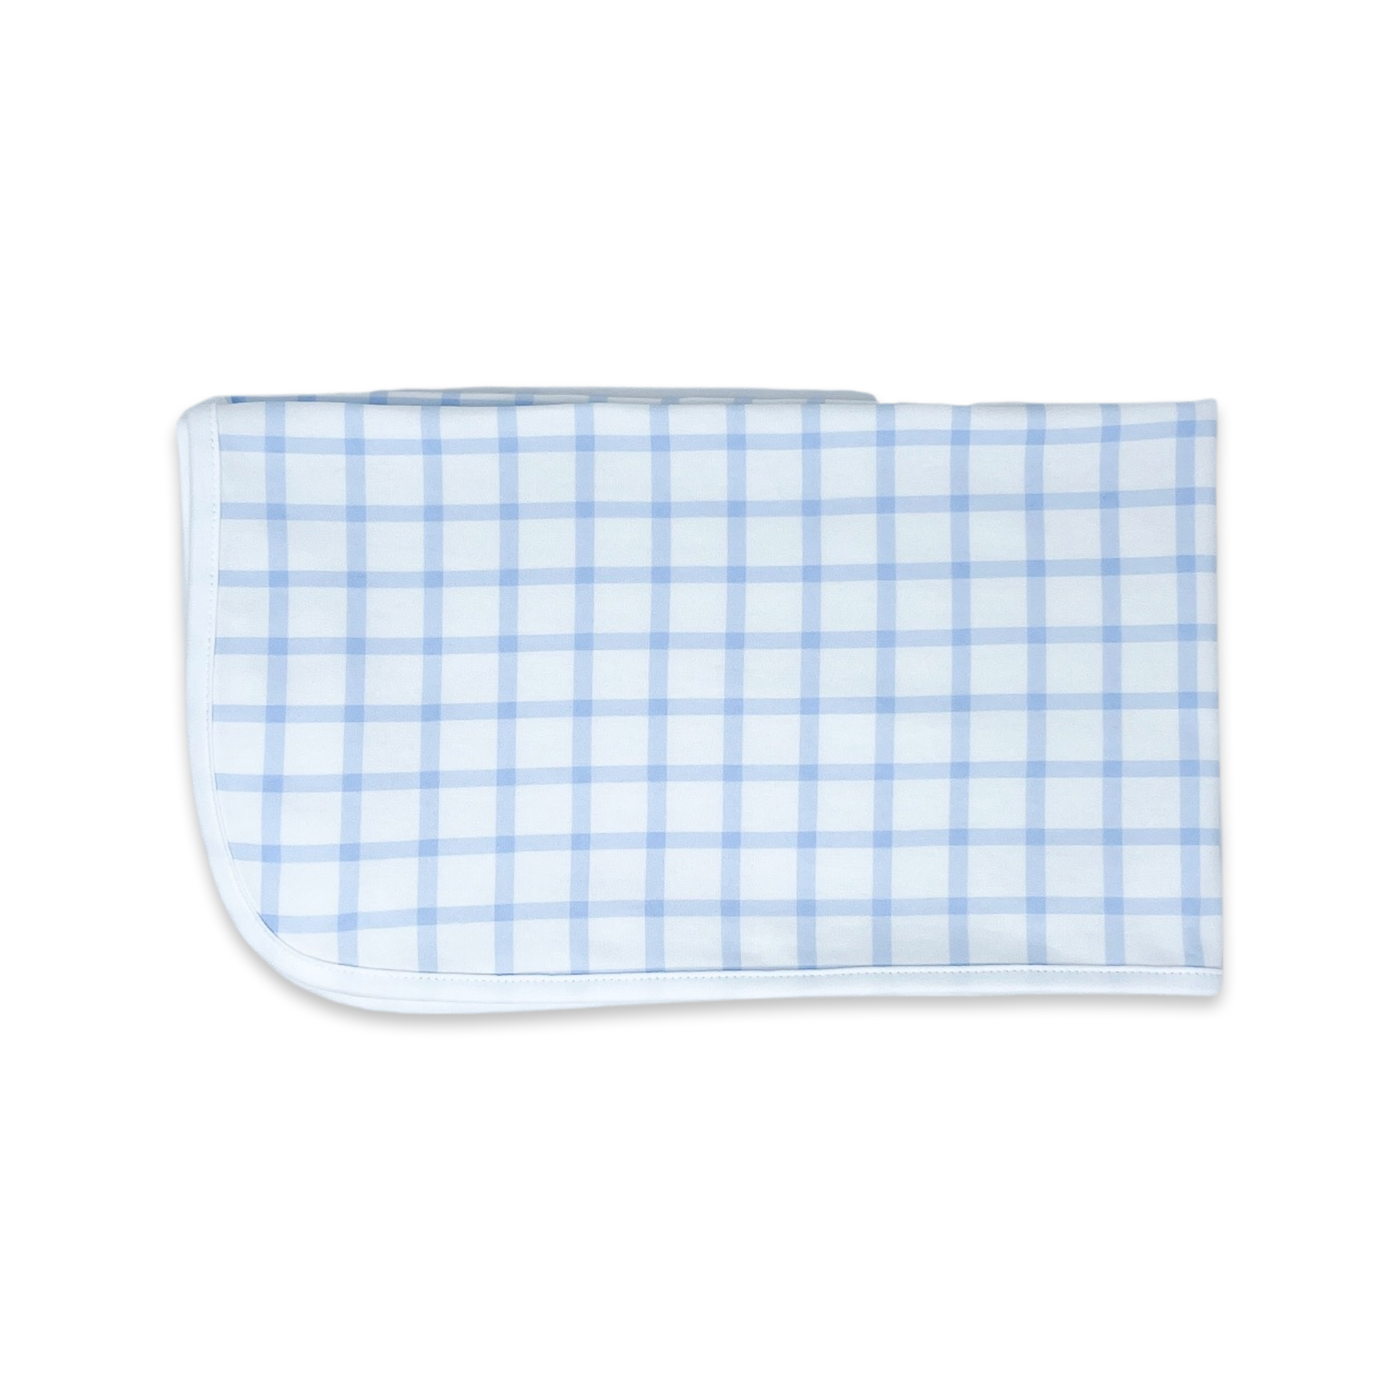 Bundled Up Blanket - Whales Blue Windowpane